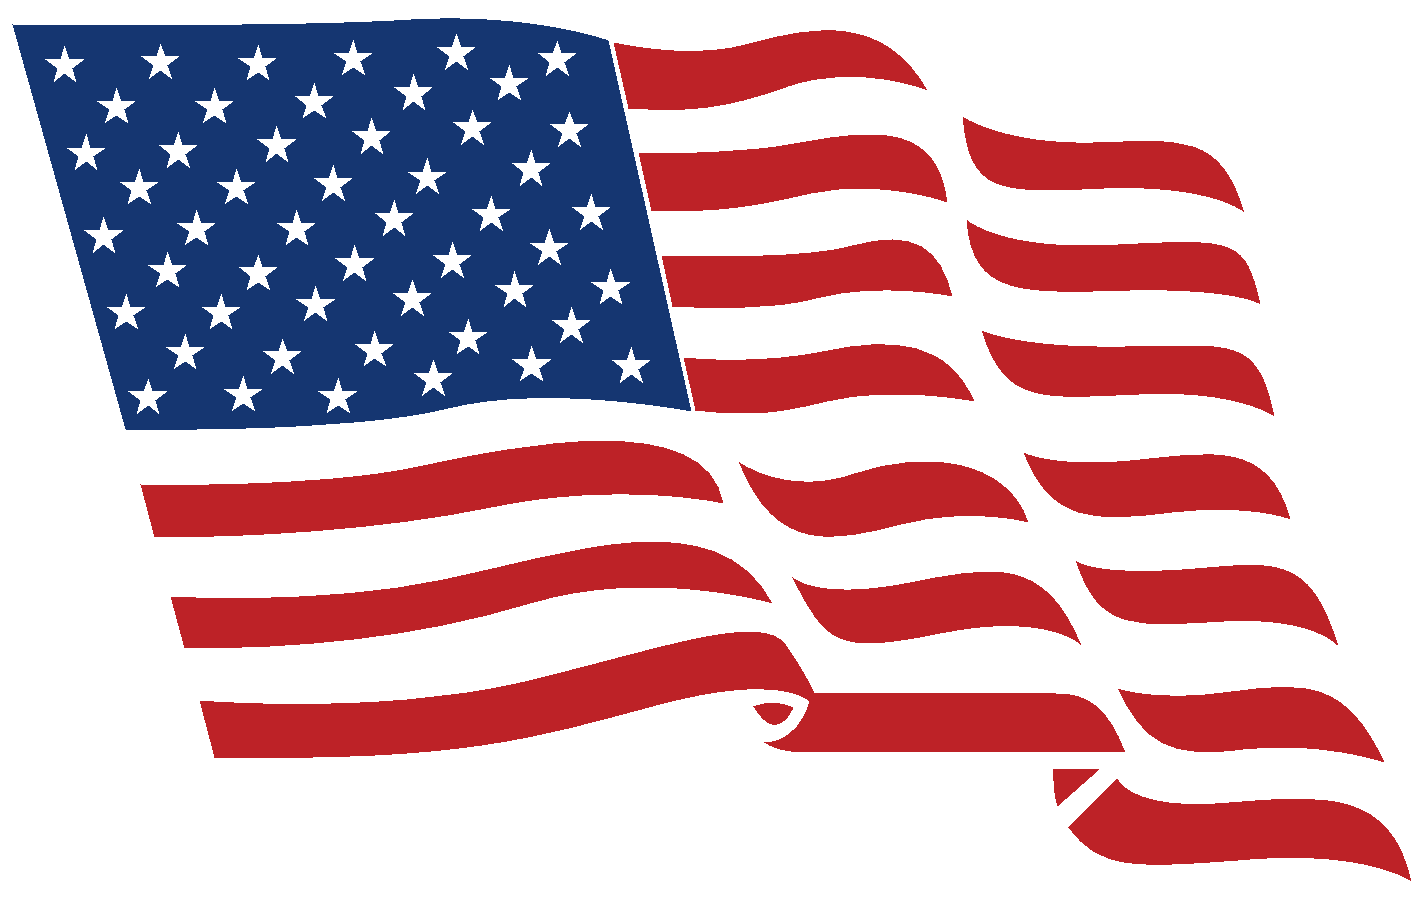 CLIPART USA WAVING FLAG